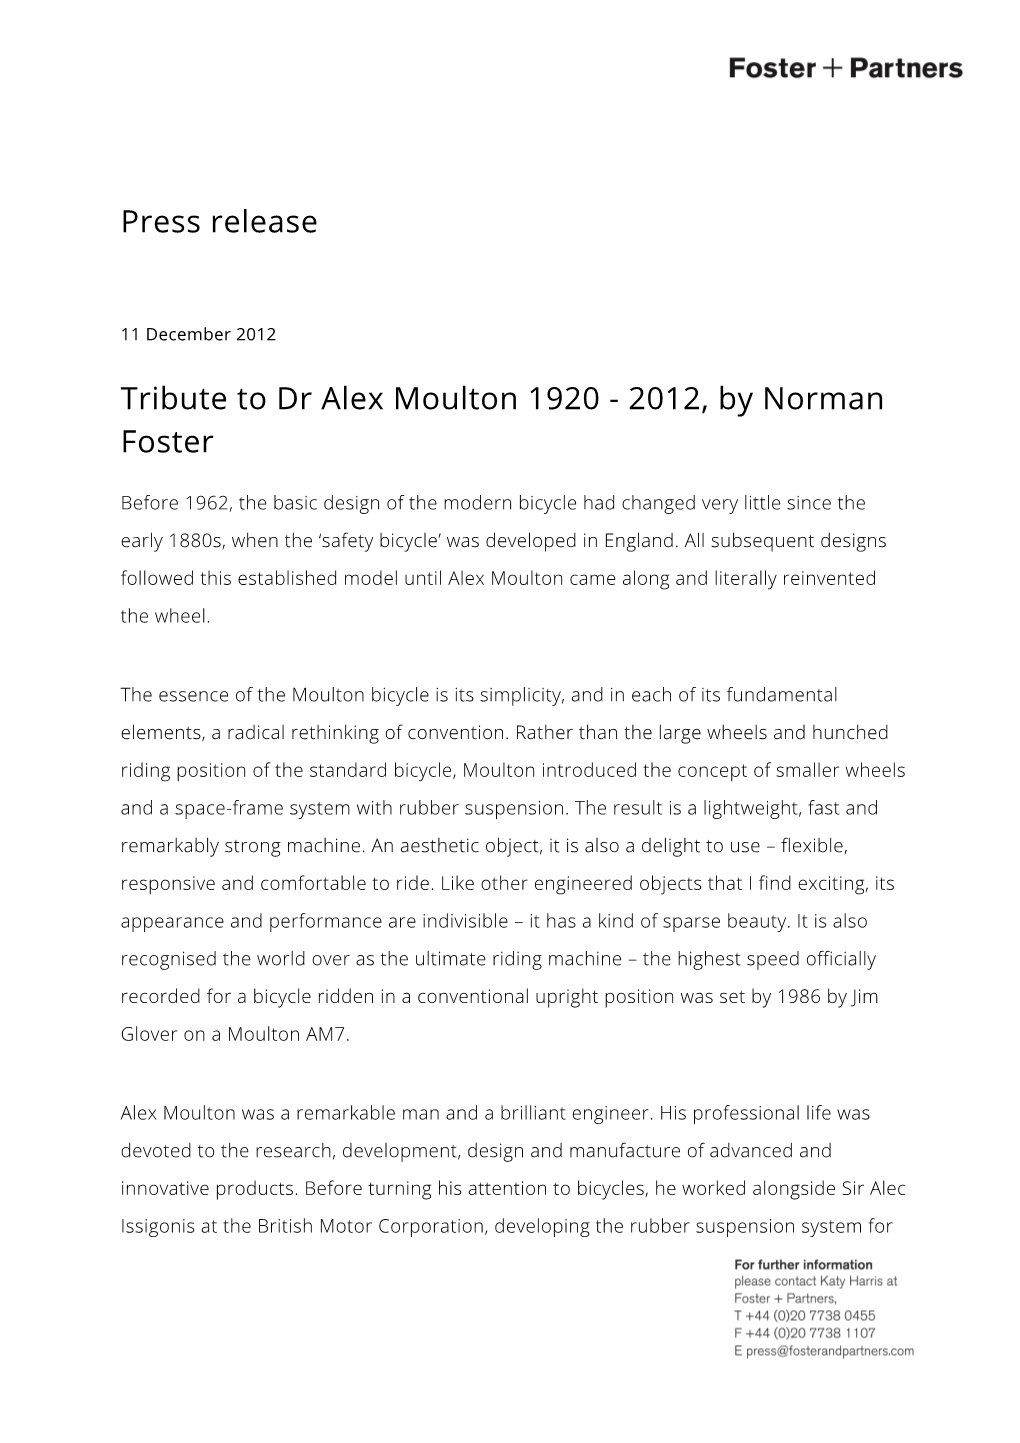 Press Release Tribute to Dr Alex Moulton 1920